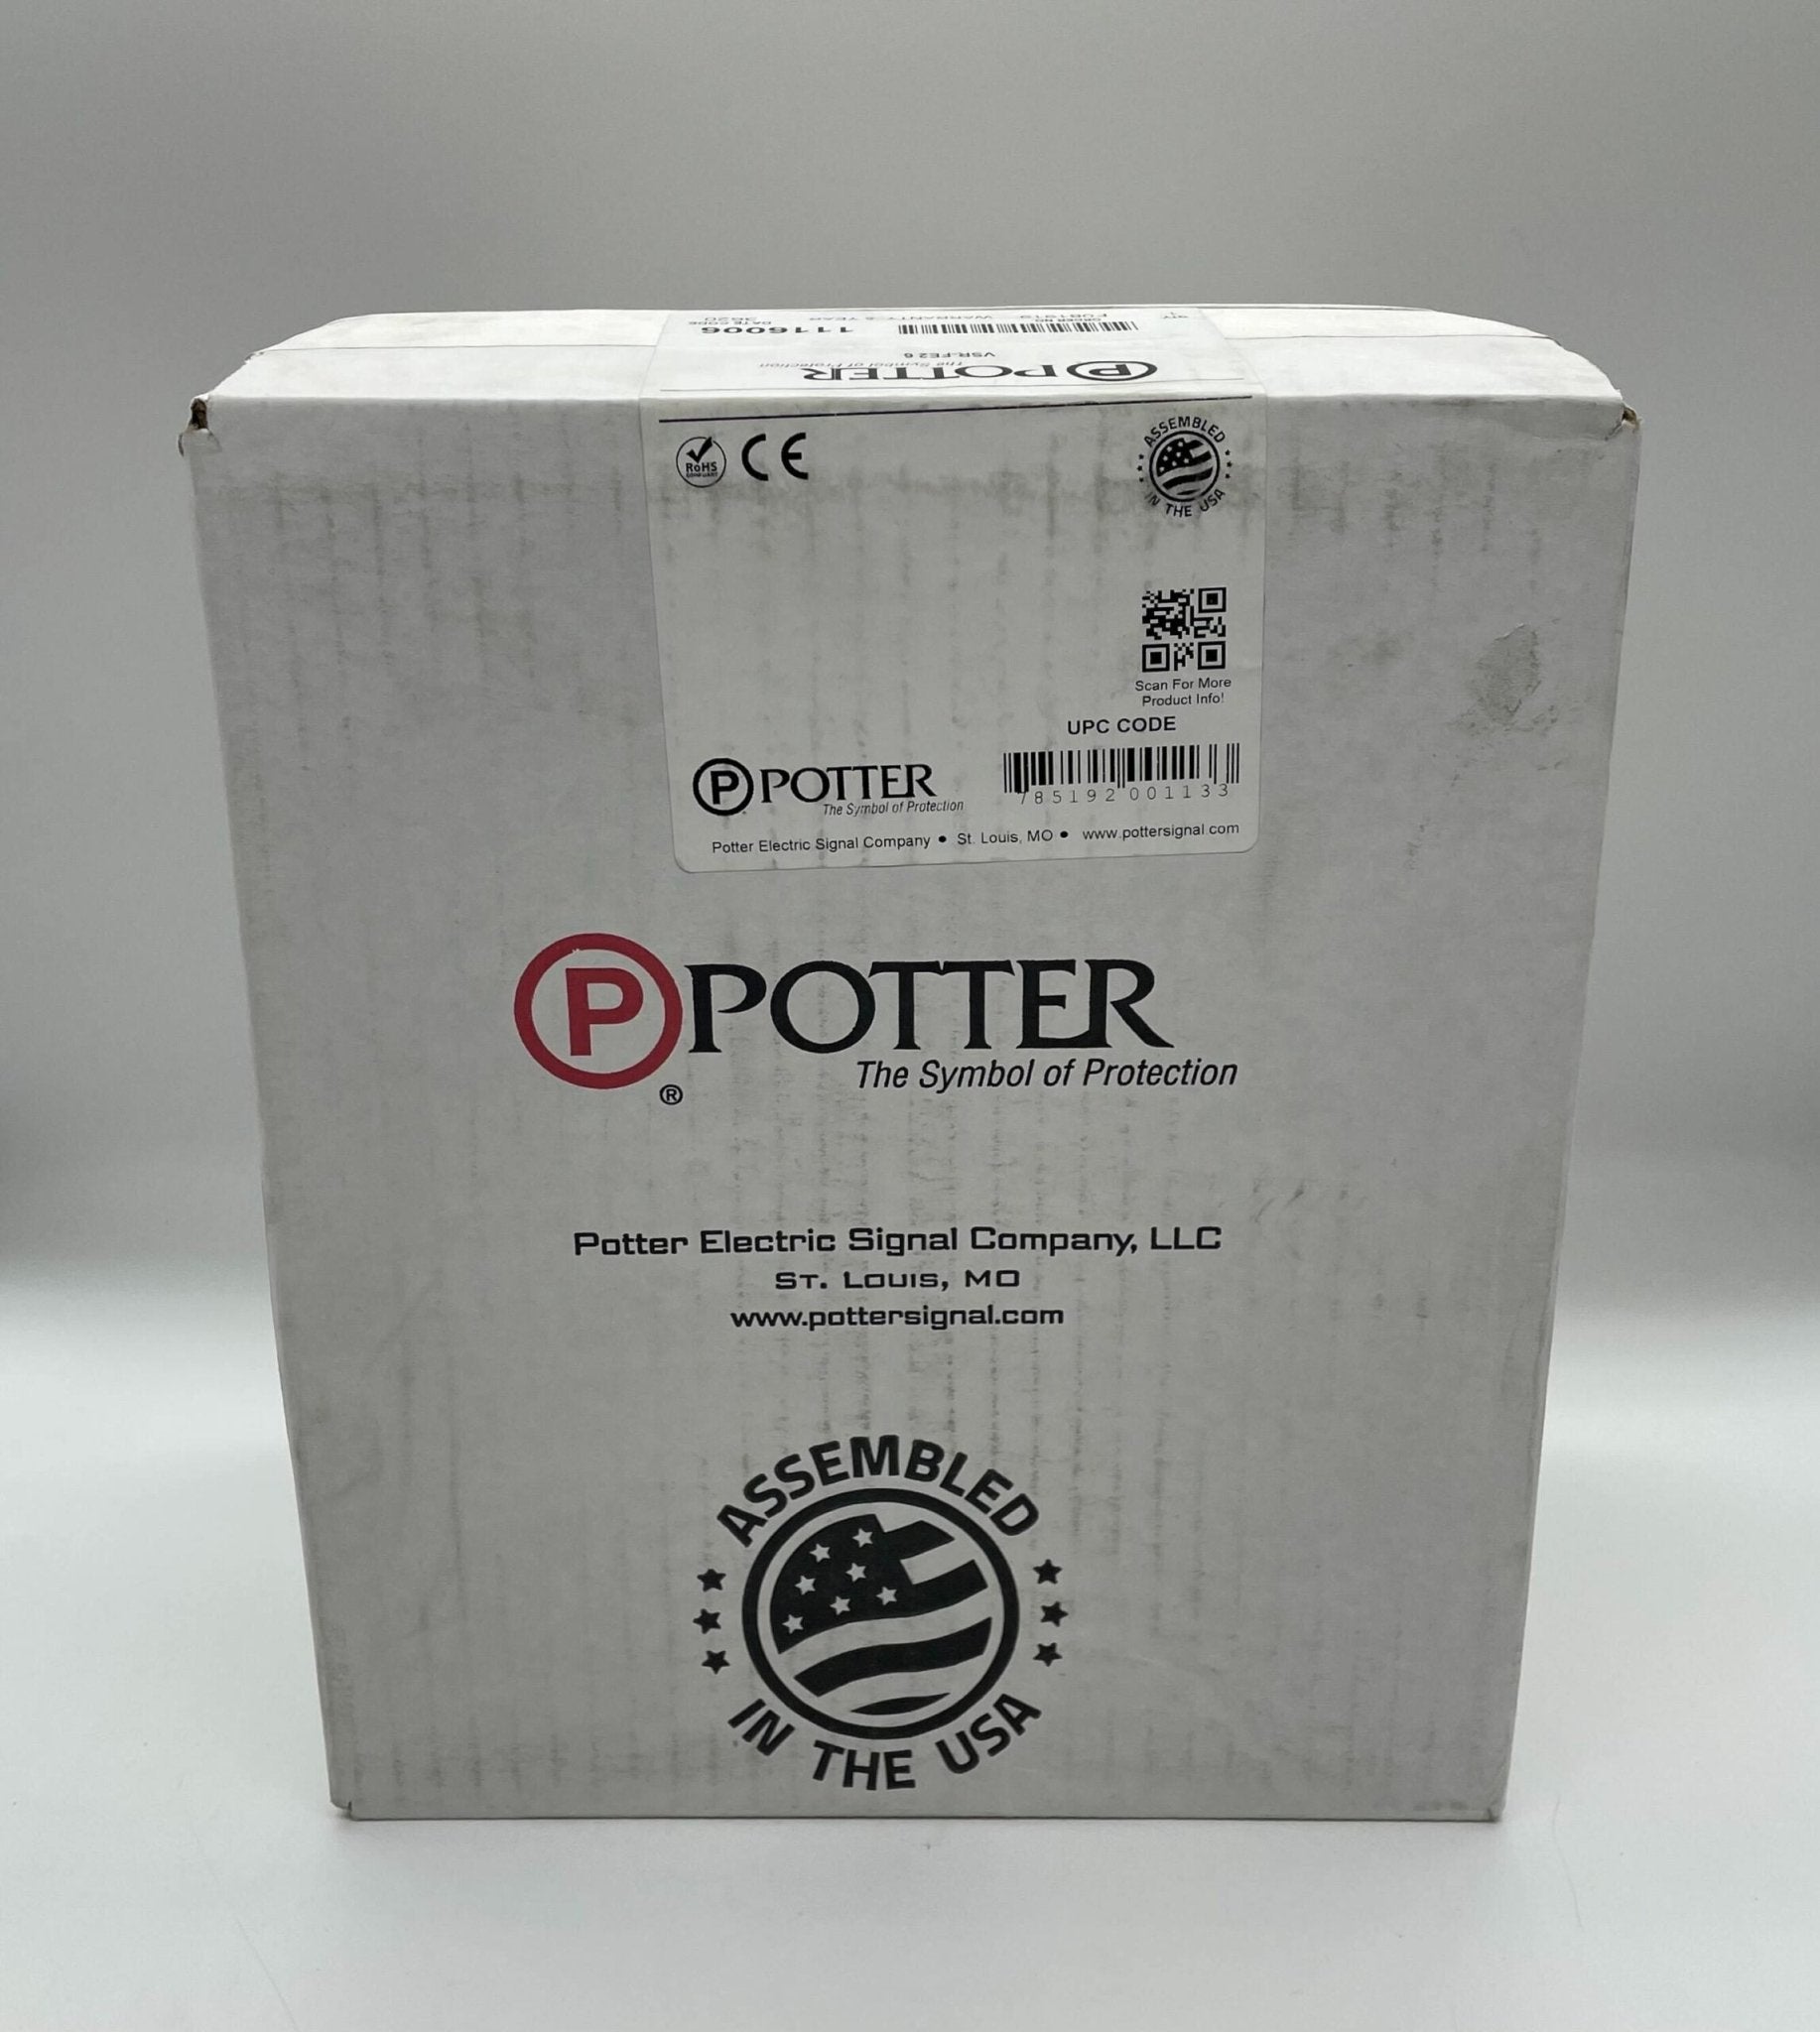 Potter VSR-FE2-6 - The Fire Alarm Supplier